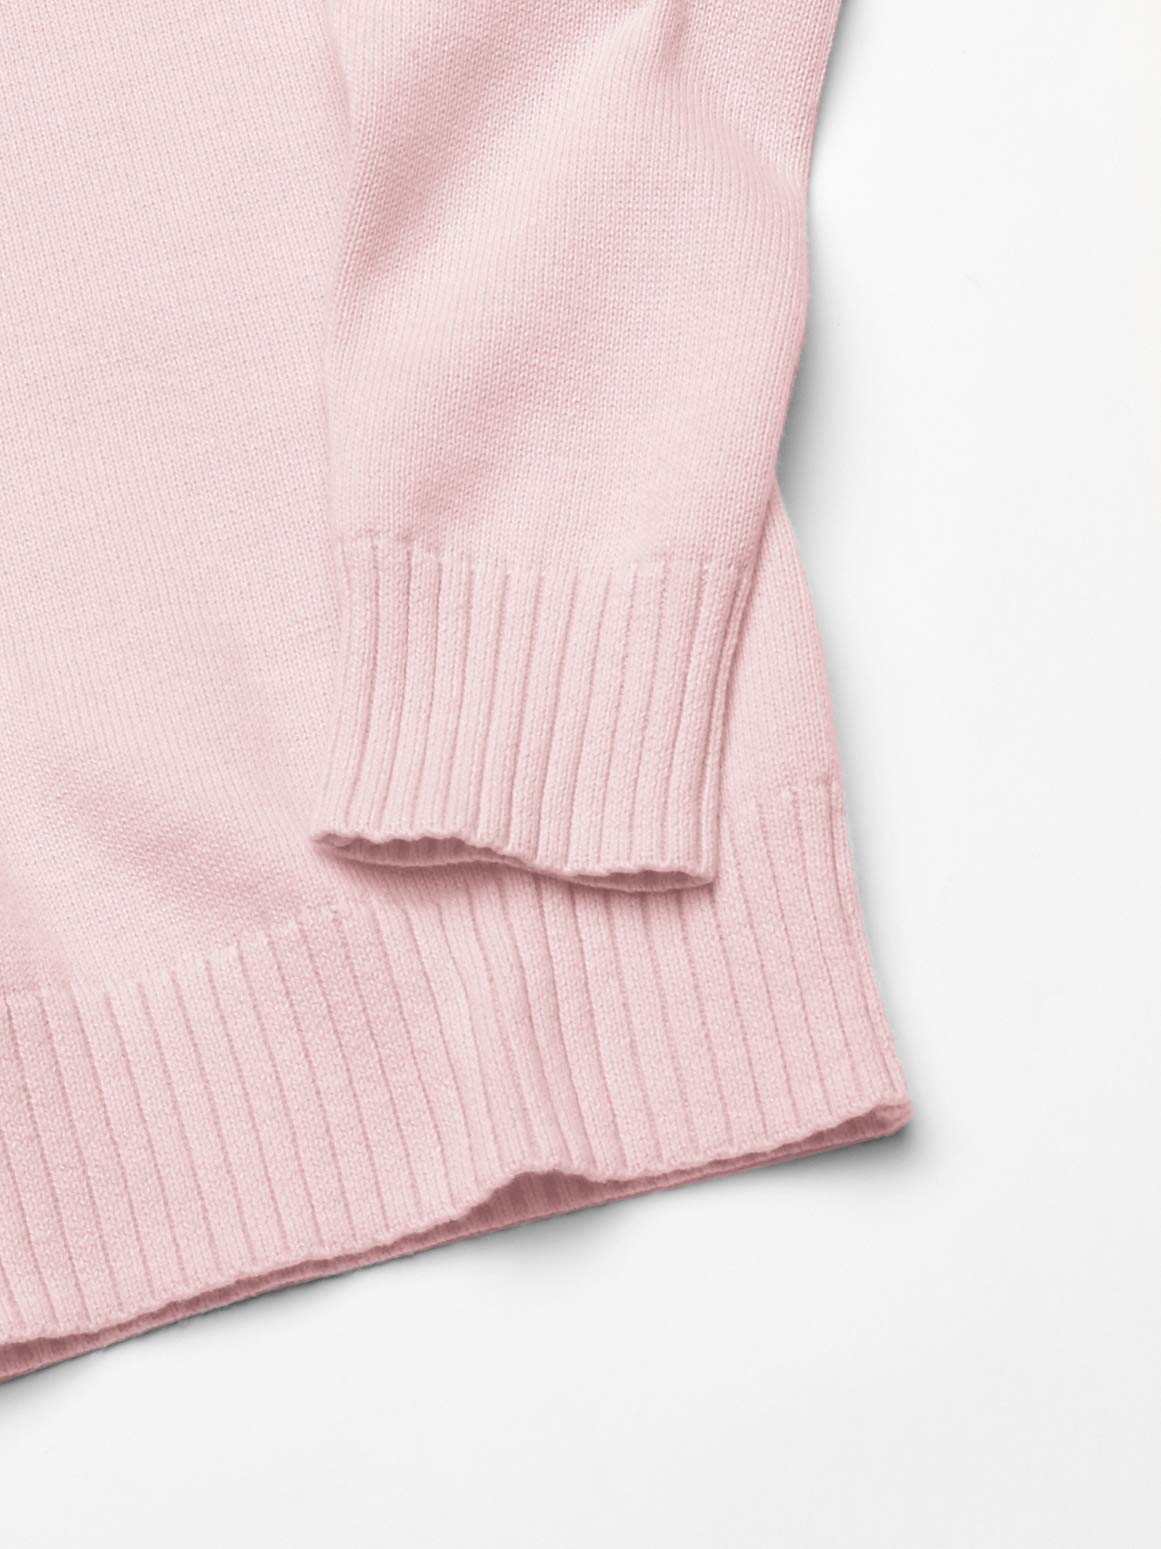 Amazon Essentials Women's 100% Cotton Long-Sleeve V-Neck Sweater